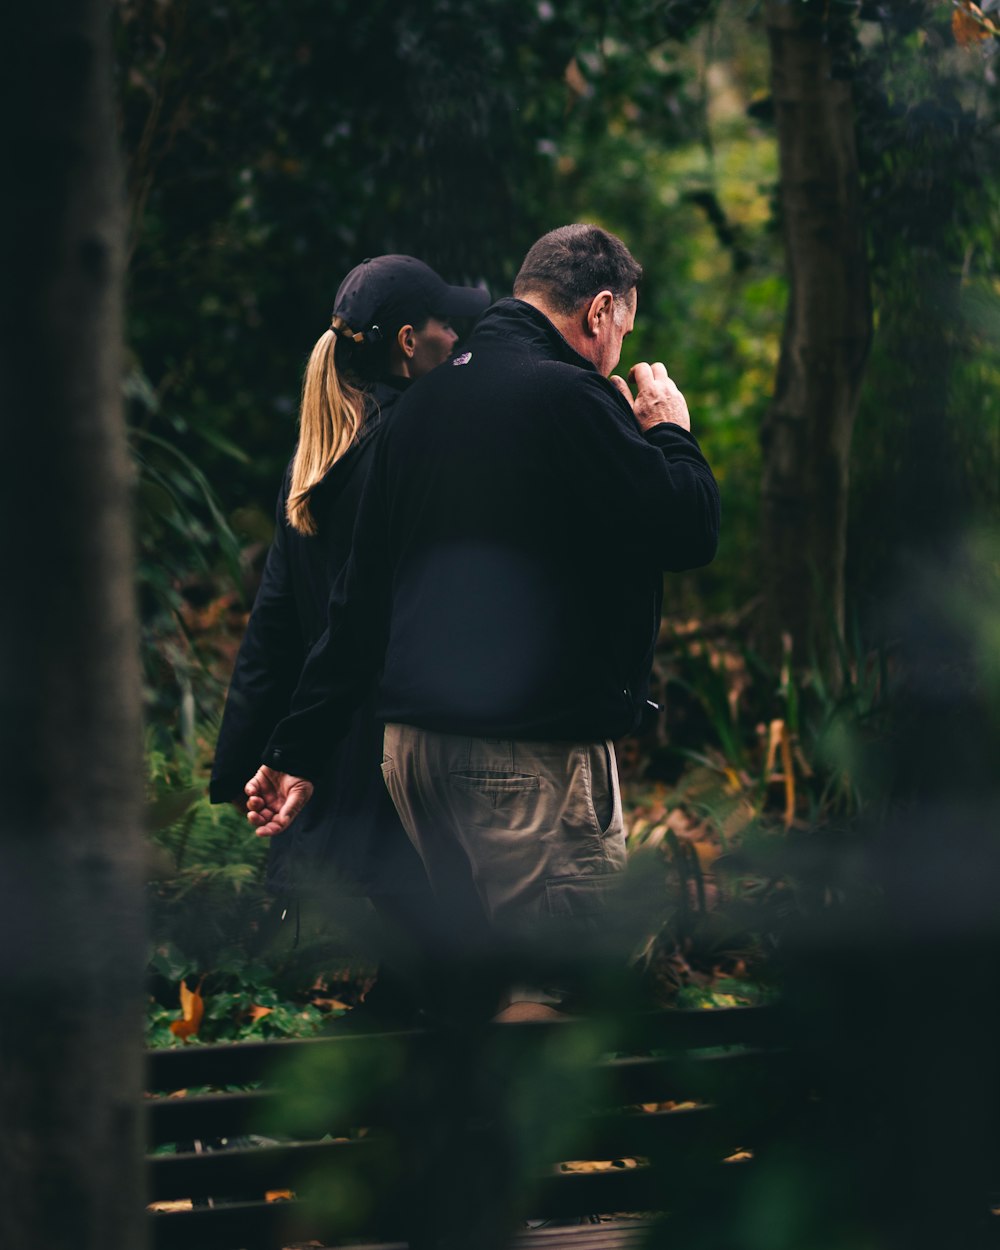 man in black jacket kissing woman in black jacket